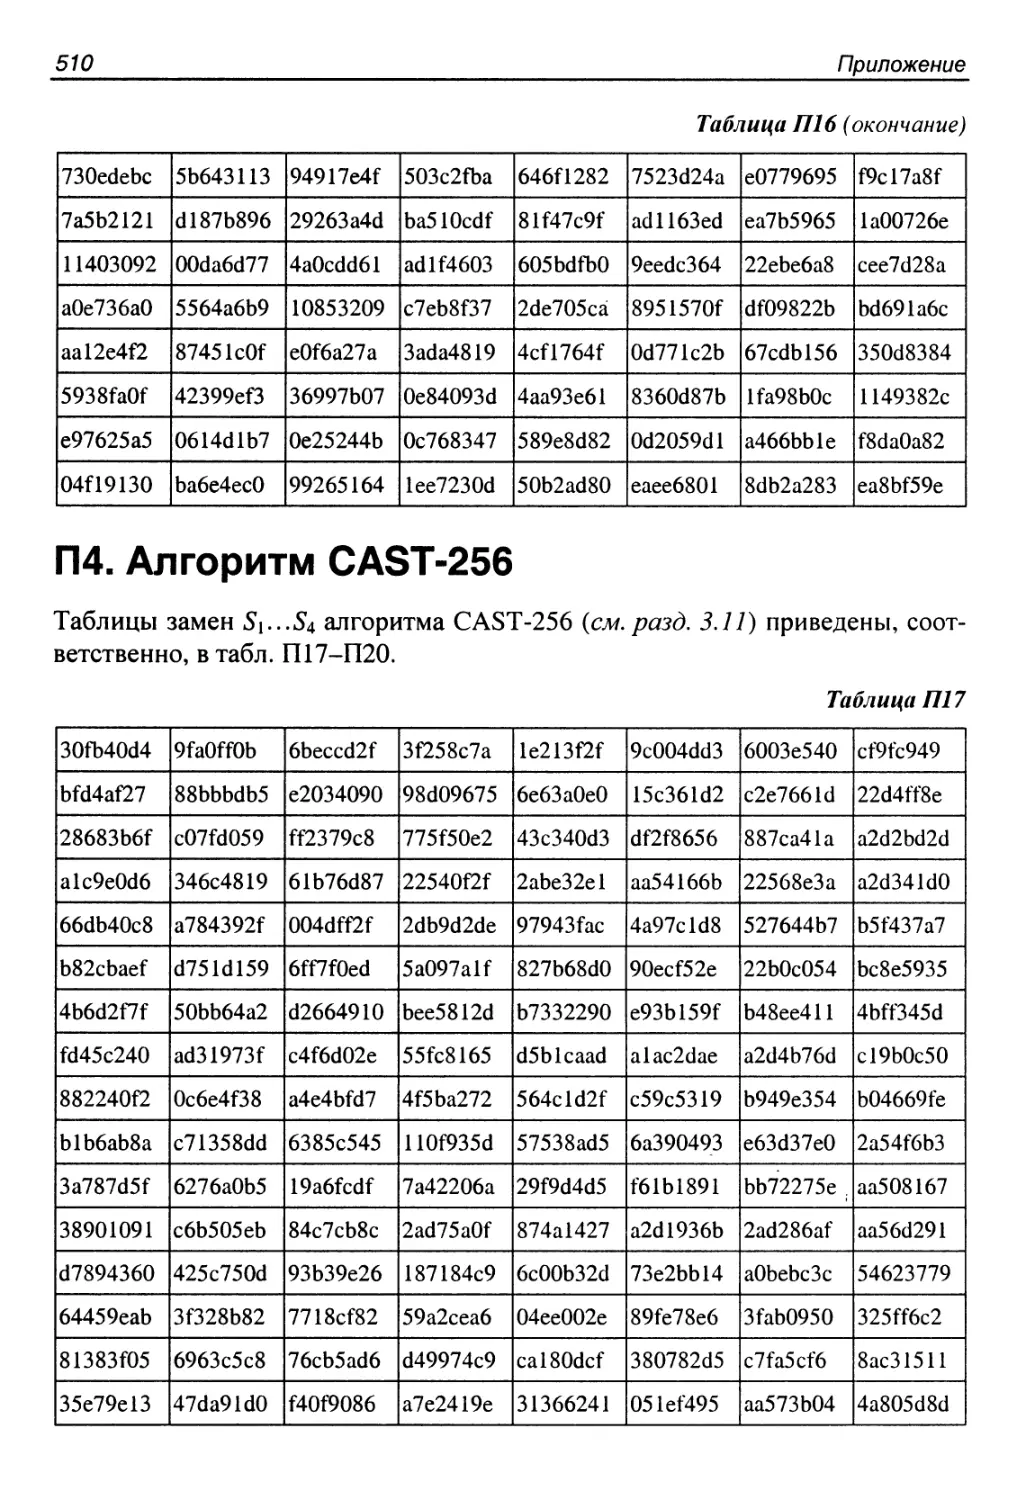 П4. Алгоритм CAST-256